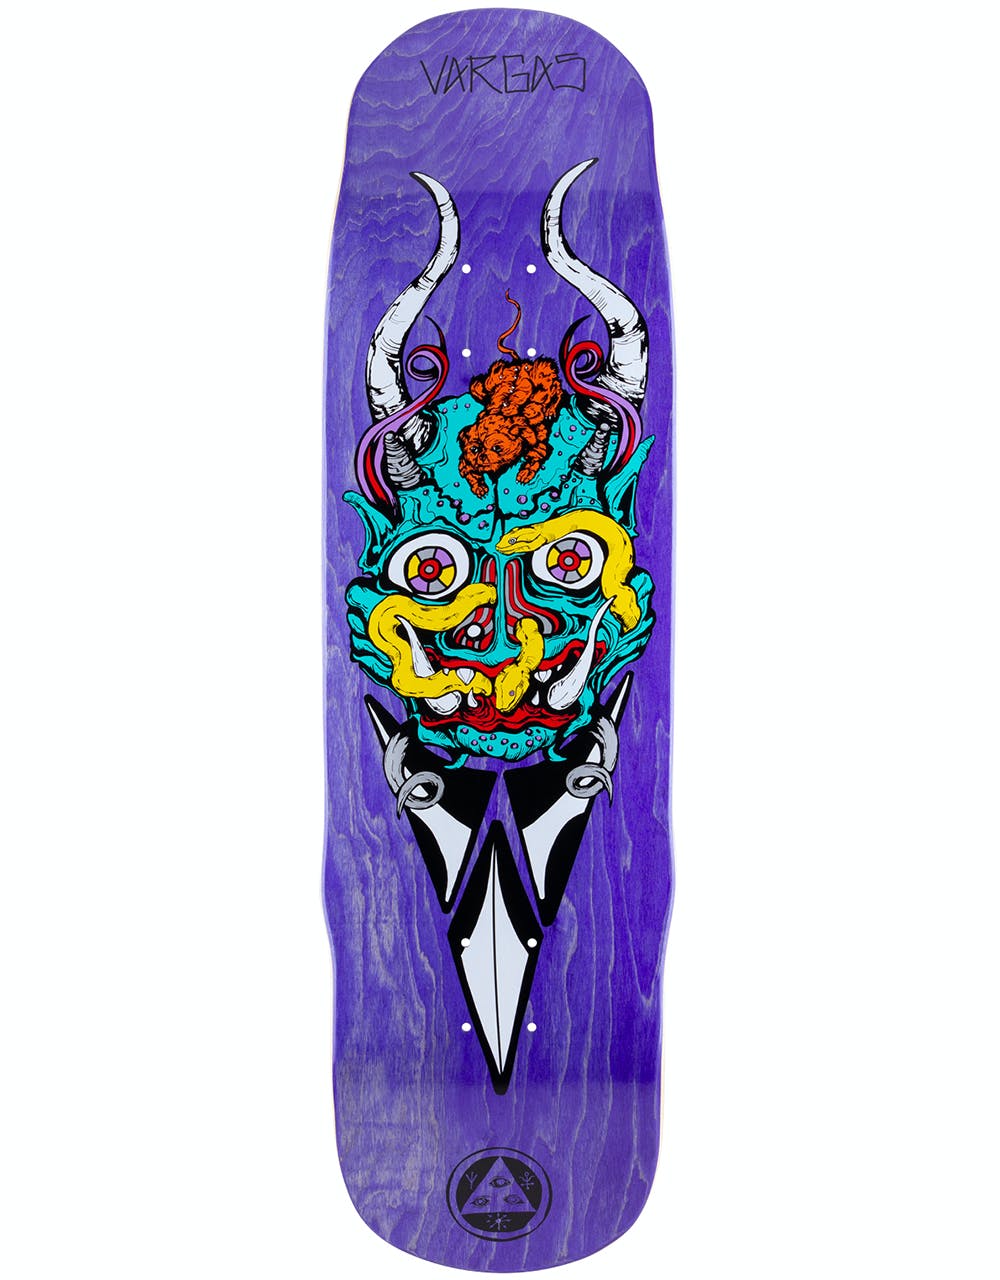 Welcome Vargas Maligno on Effigy Skateboard Deck - 8.8"